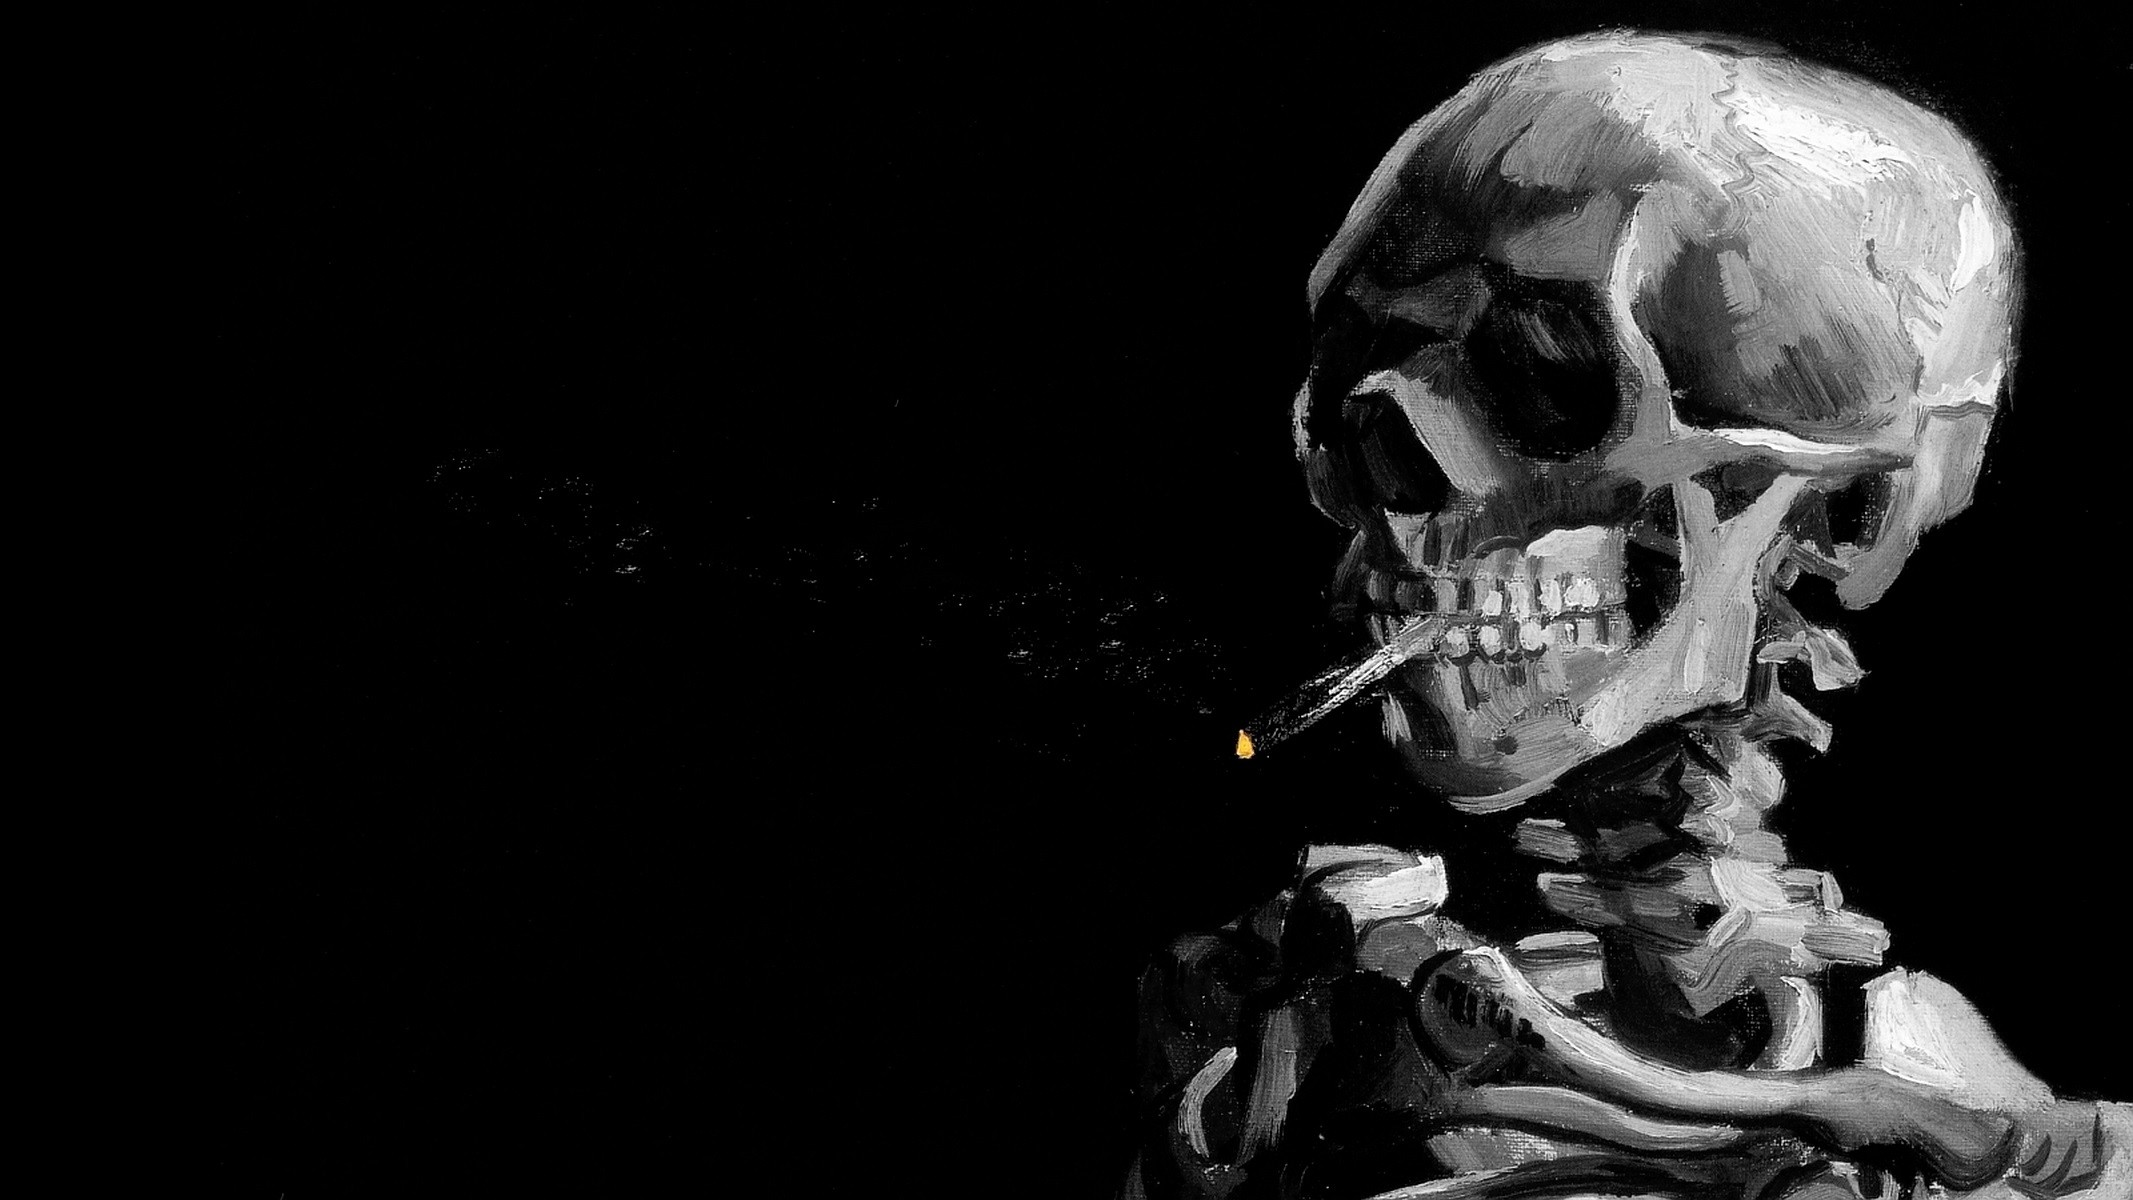 Digital Art Skull Black Background Painting Bones Spine Ribs Teeth Smoking Cigarettes Smoke Monochro 2133x1200